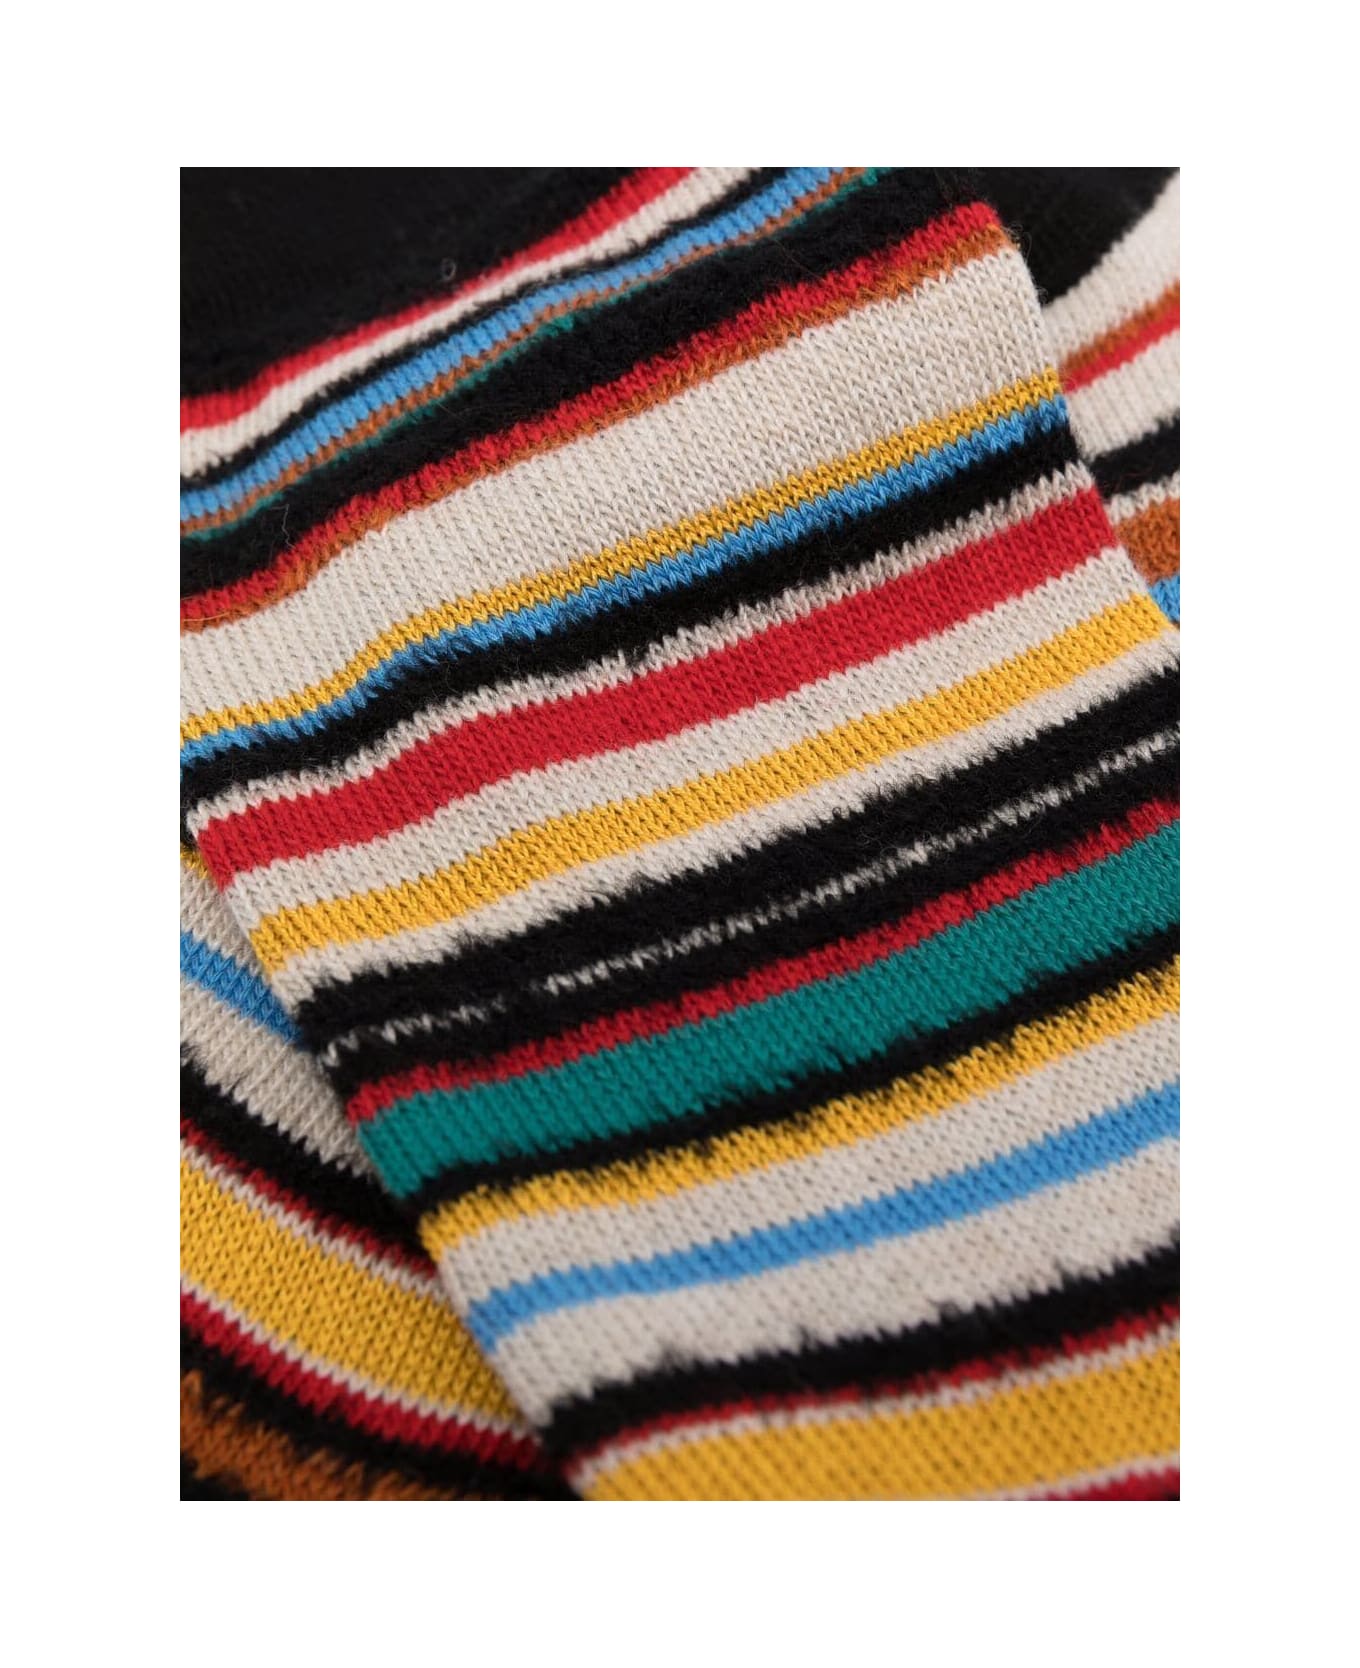 Paul Smith Men Sock Twxture Stripe - Multi Coloured 靴下